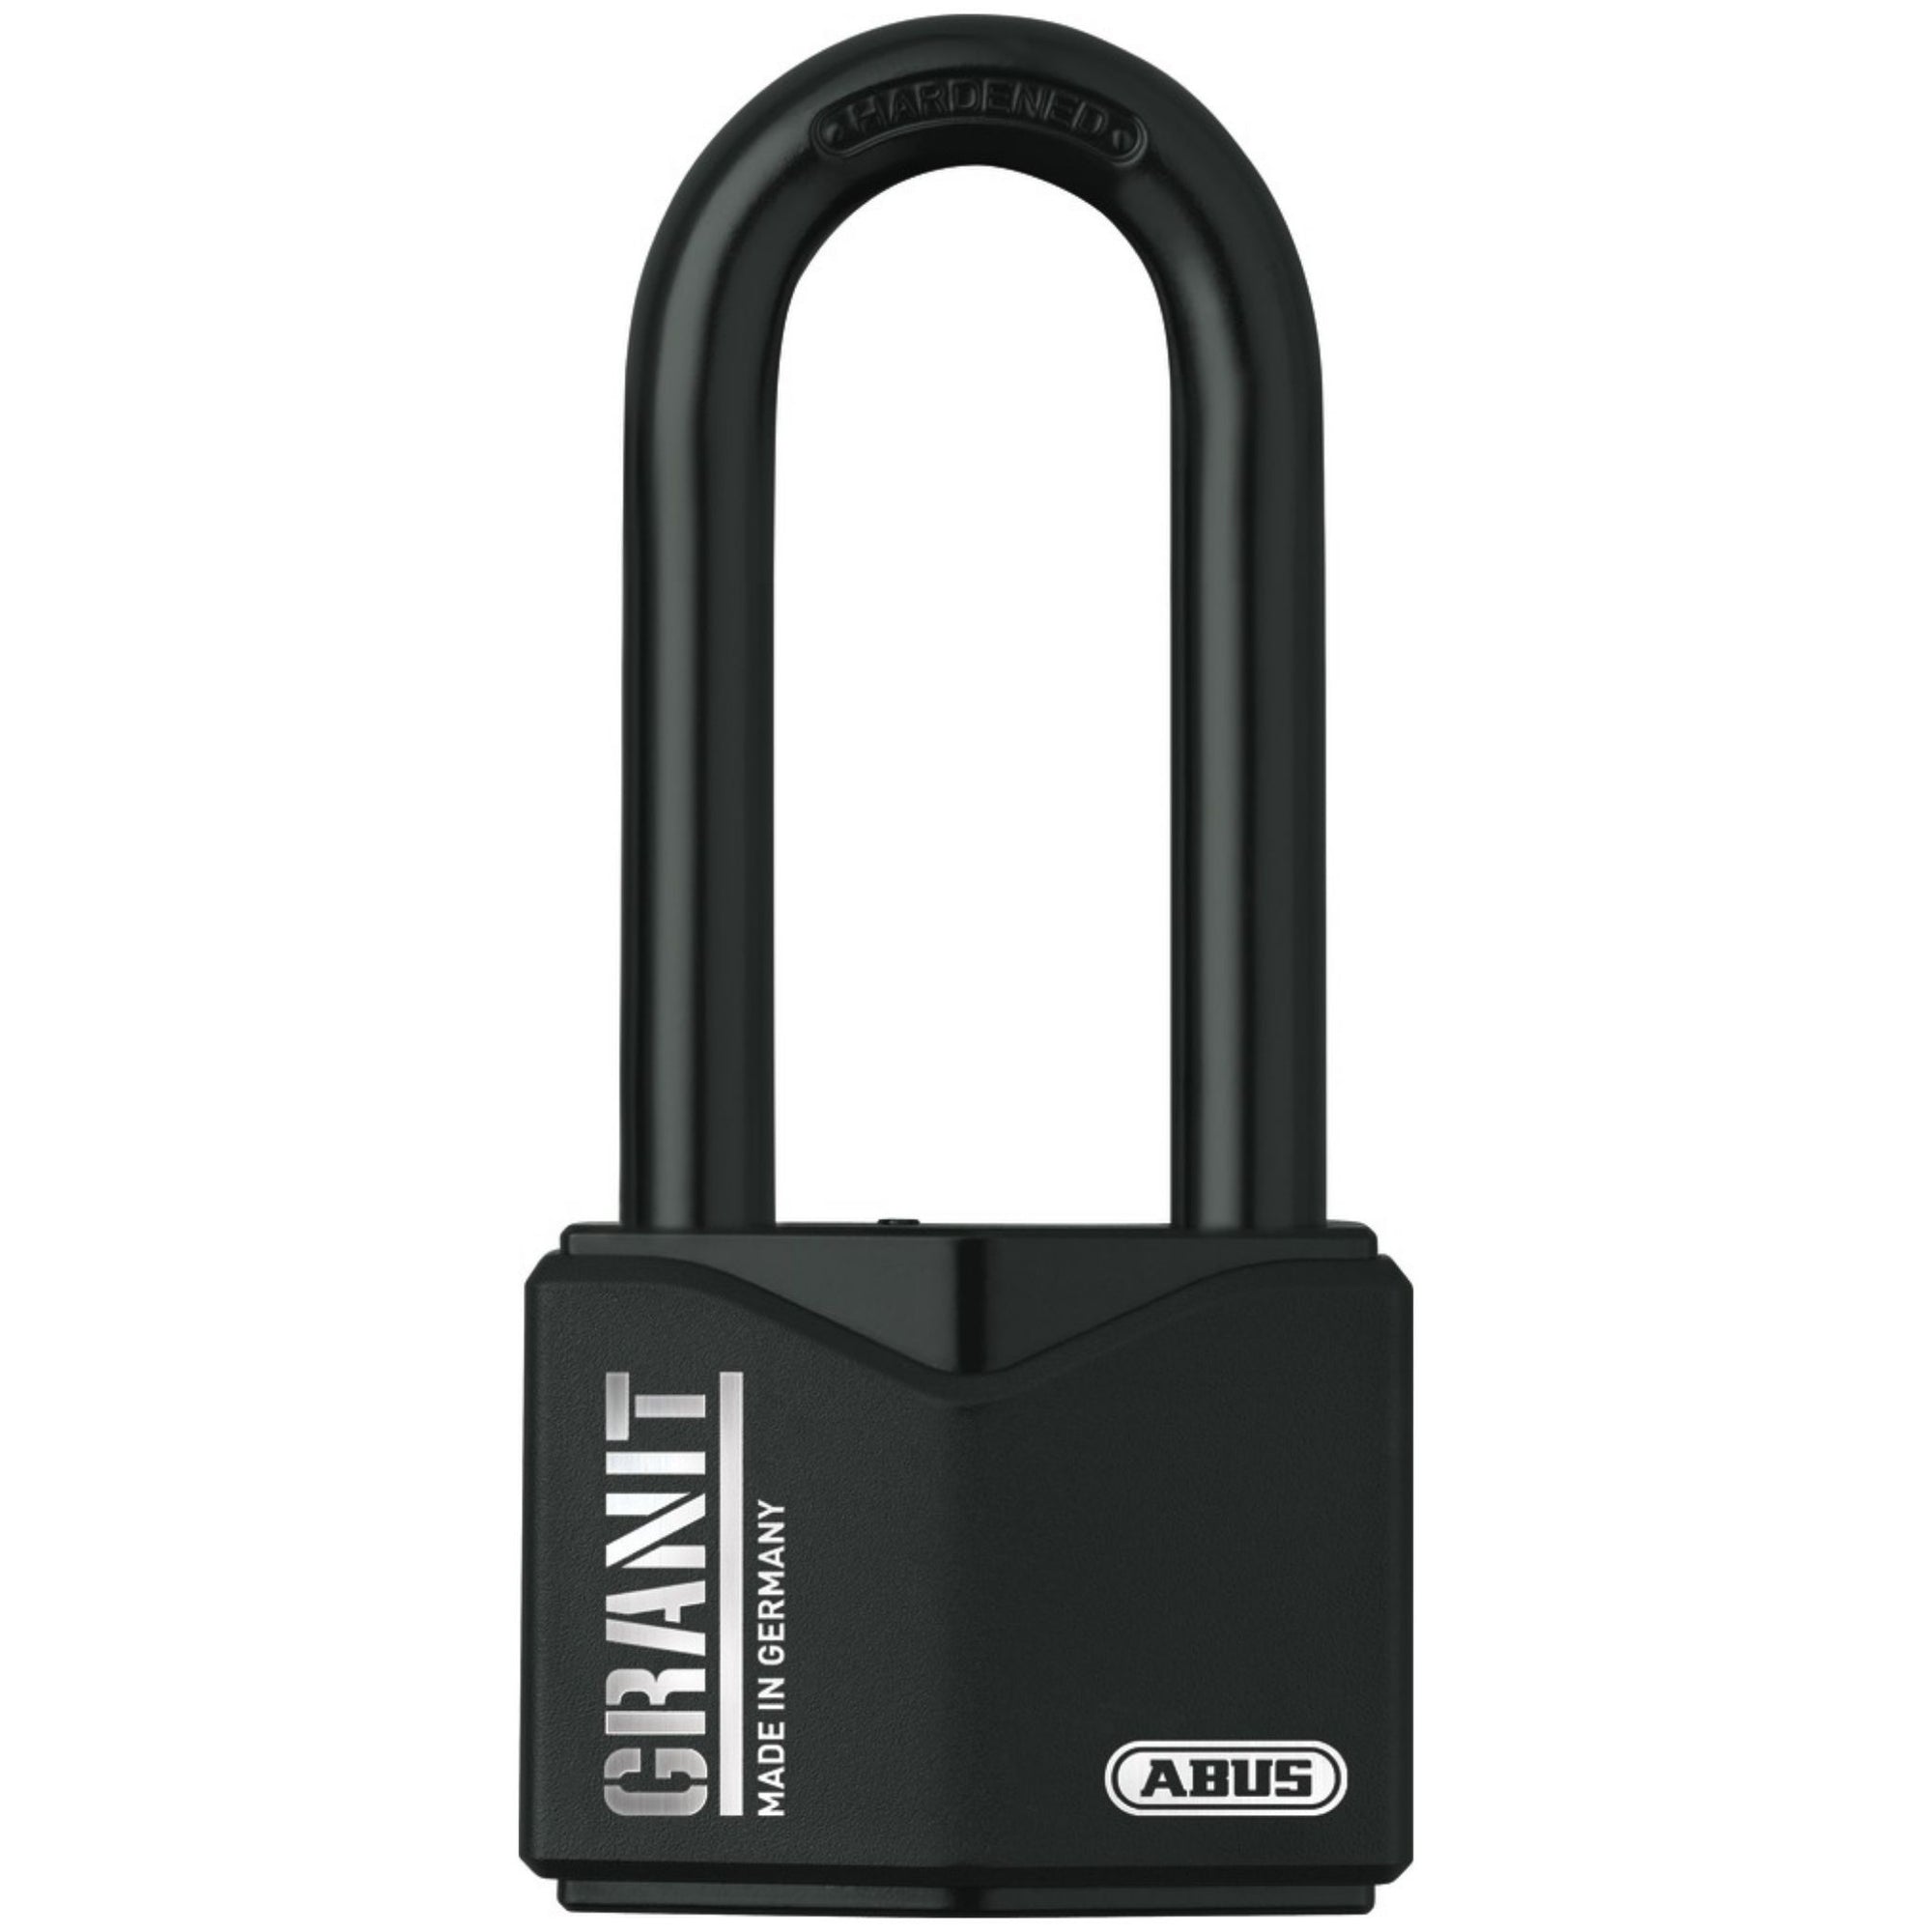 Abus 37RK/55HB75 KA 5544653 Granit Padlock Keyed Alike Locks with 3" Shackle Match to Existing Key# KA5544653 - The Lock Source